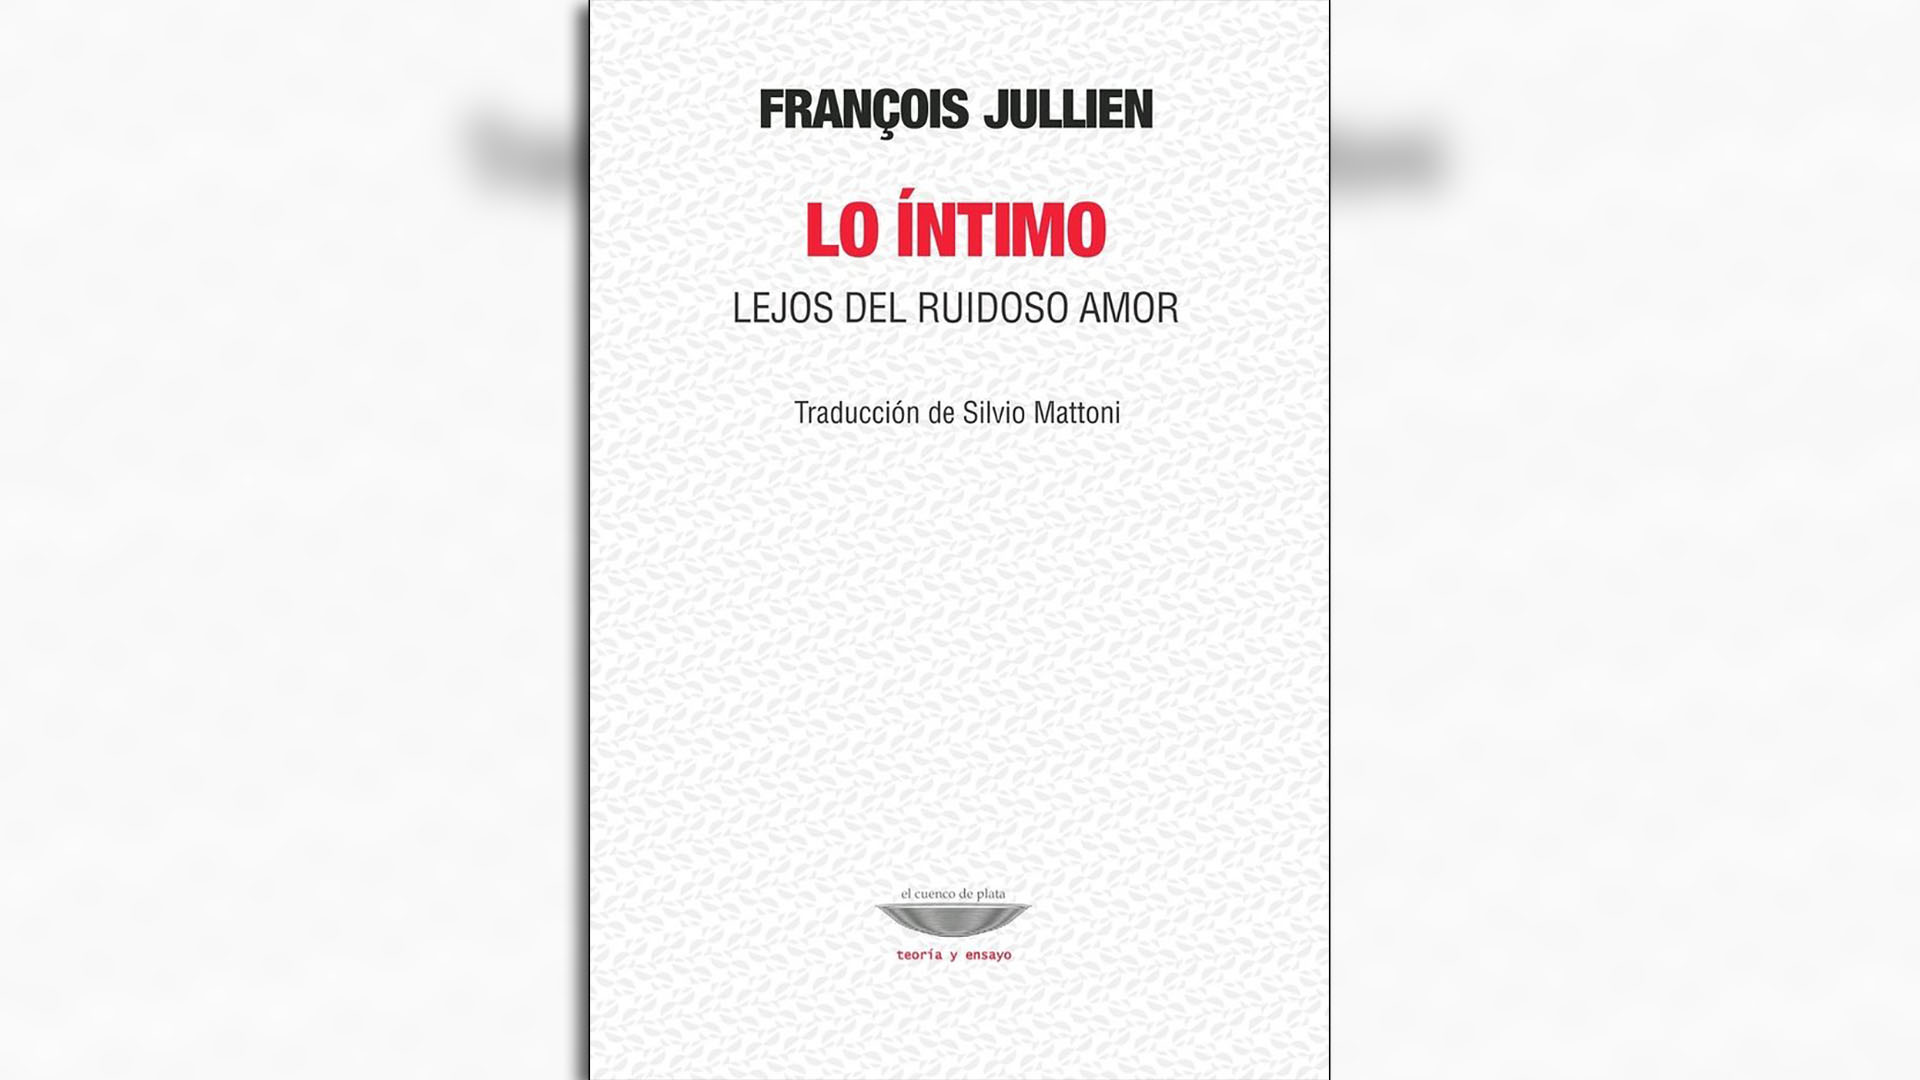 "Lo íntimo", un libro de François Jullien.